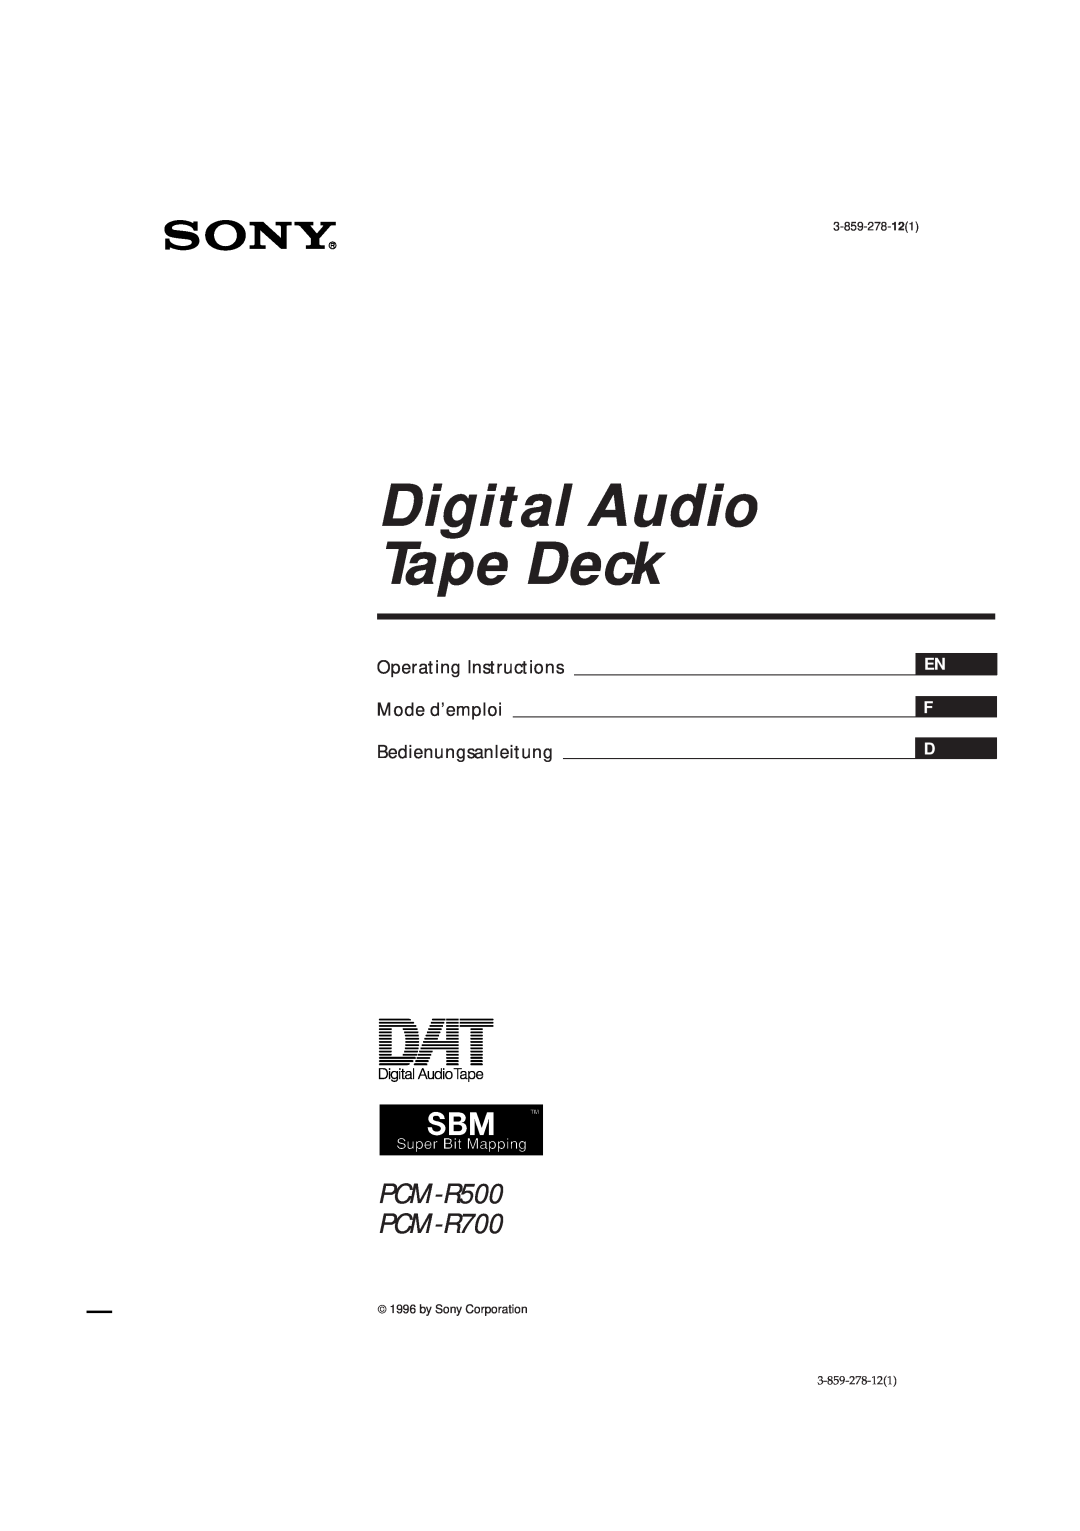 Sony manual Digital Audio Tape Deck, PCM-R500 PCM-R700, Operating Instructions, Mode d’emploi, Bedienungsanleitung 